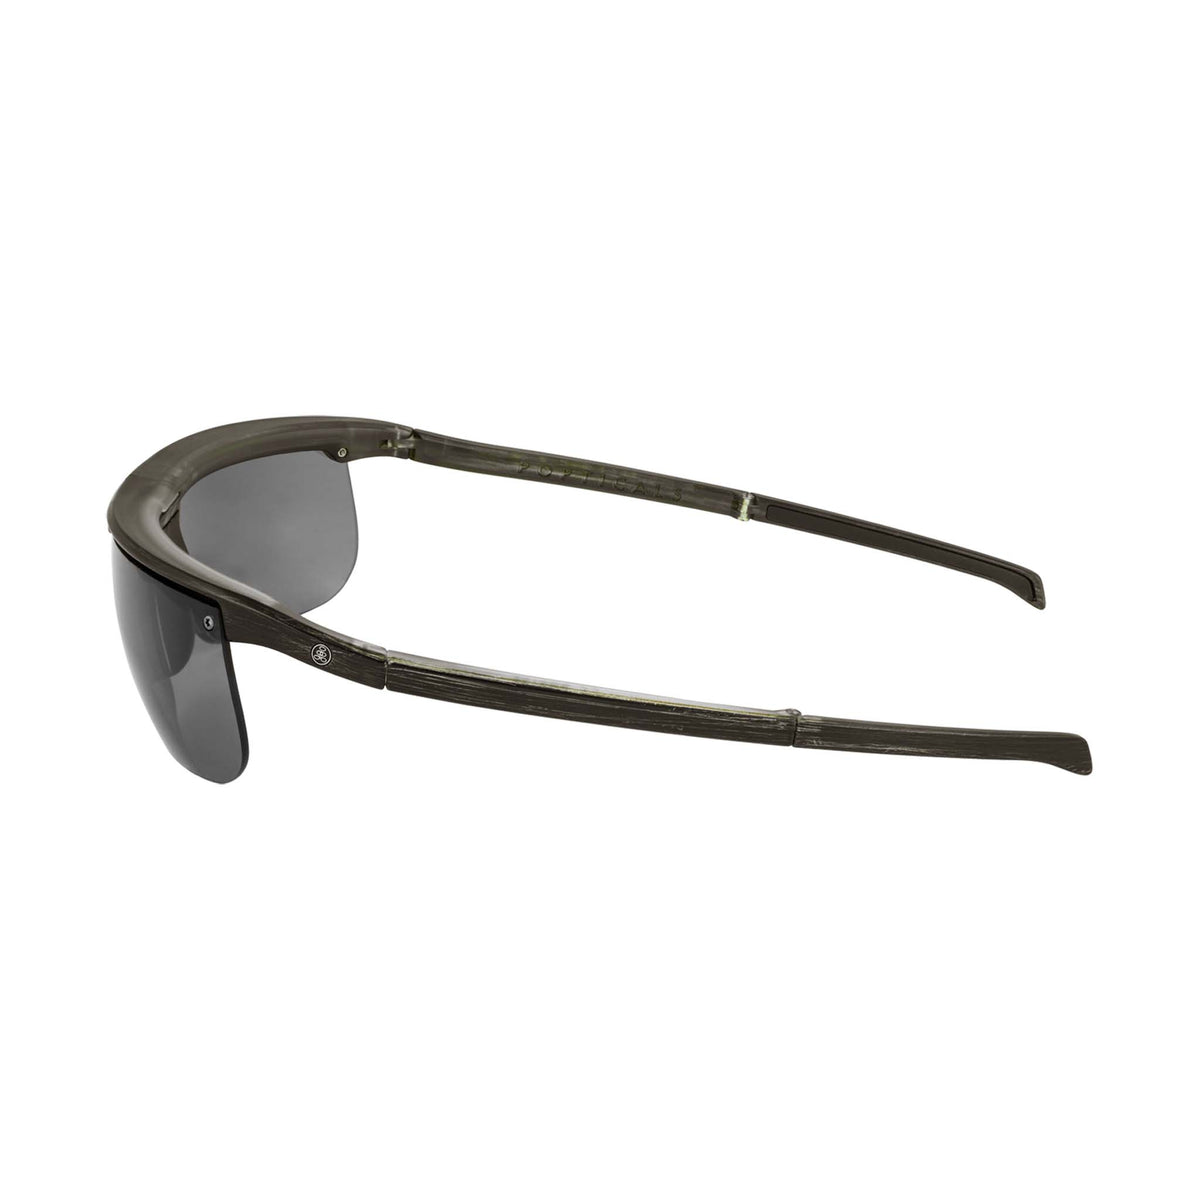 Popticals, Premium Compact Sunglasses, PopArt, 090030-ZUGP, Polarized Sunglasses, Matte Brush Black Frame, Gray Lenses, Side View